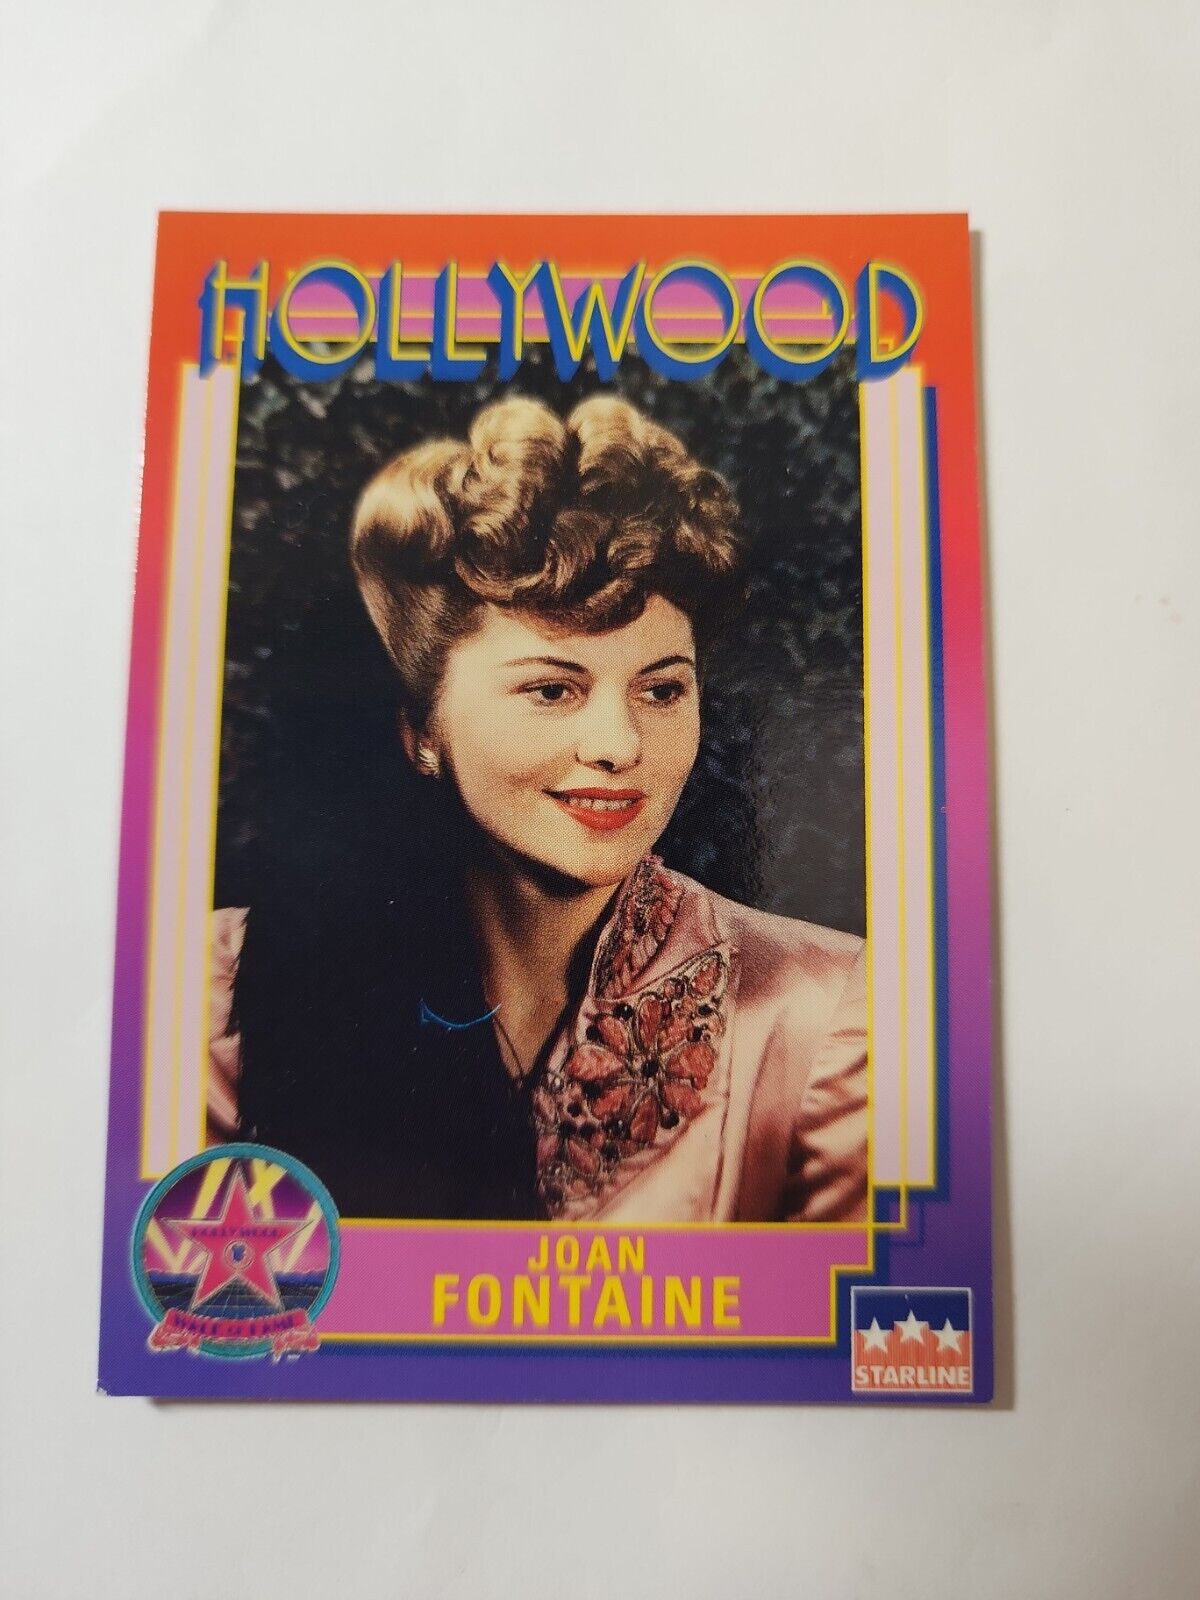 Vintage Joan Fontaine Hollywood Walk of Fame Card # 118 Starline NM corner dings